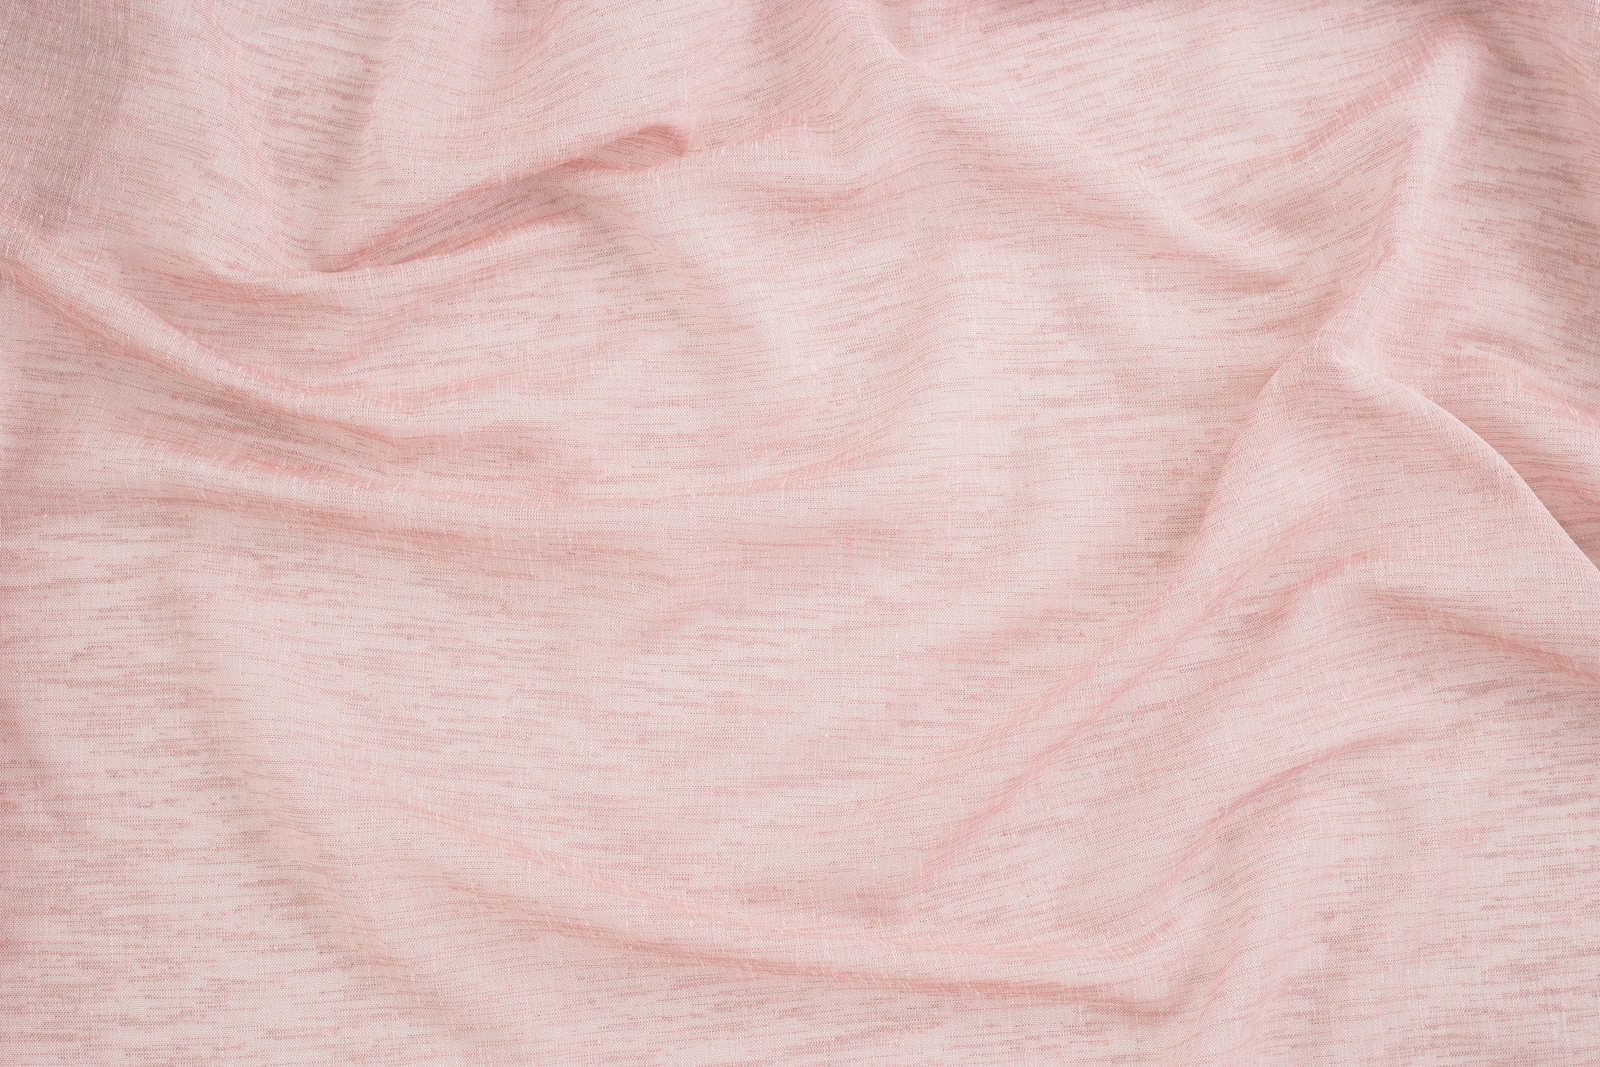             Foulard decorativo 140 cm x 245 cm in fibra artificiale rosa
        